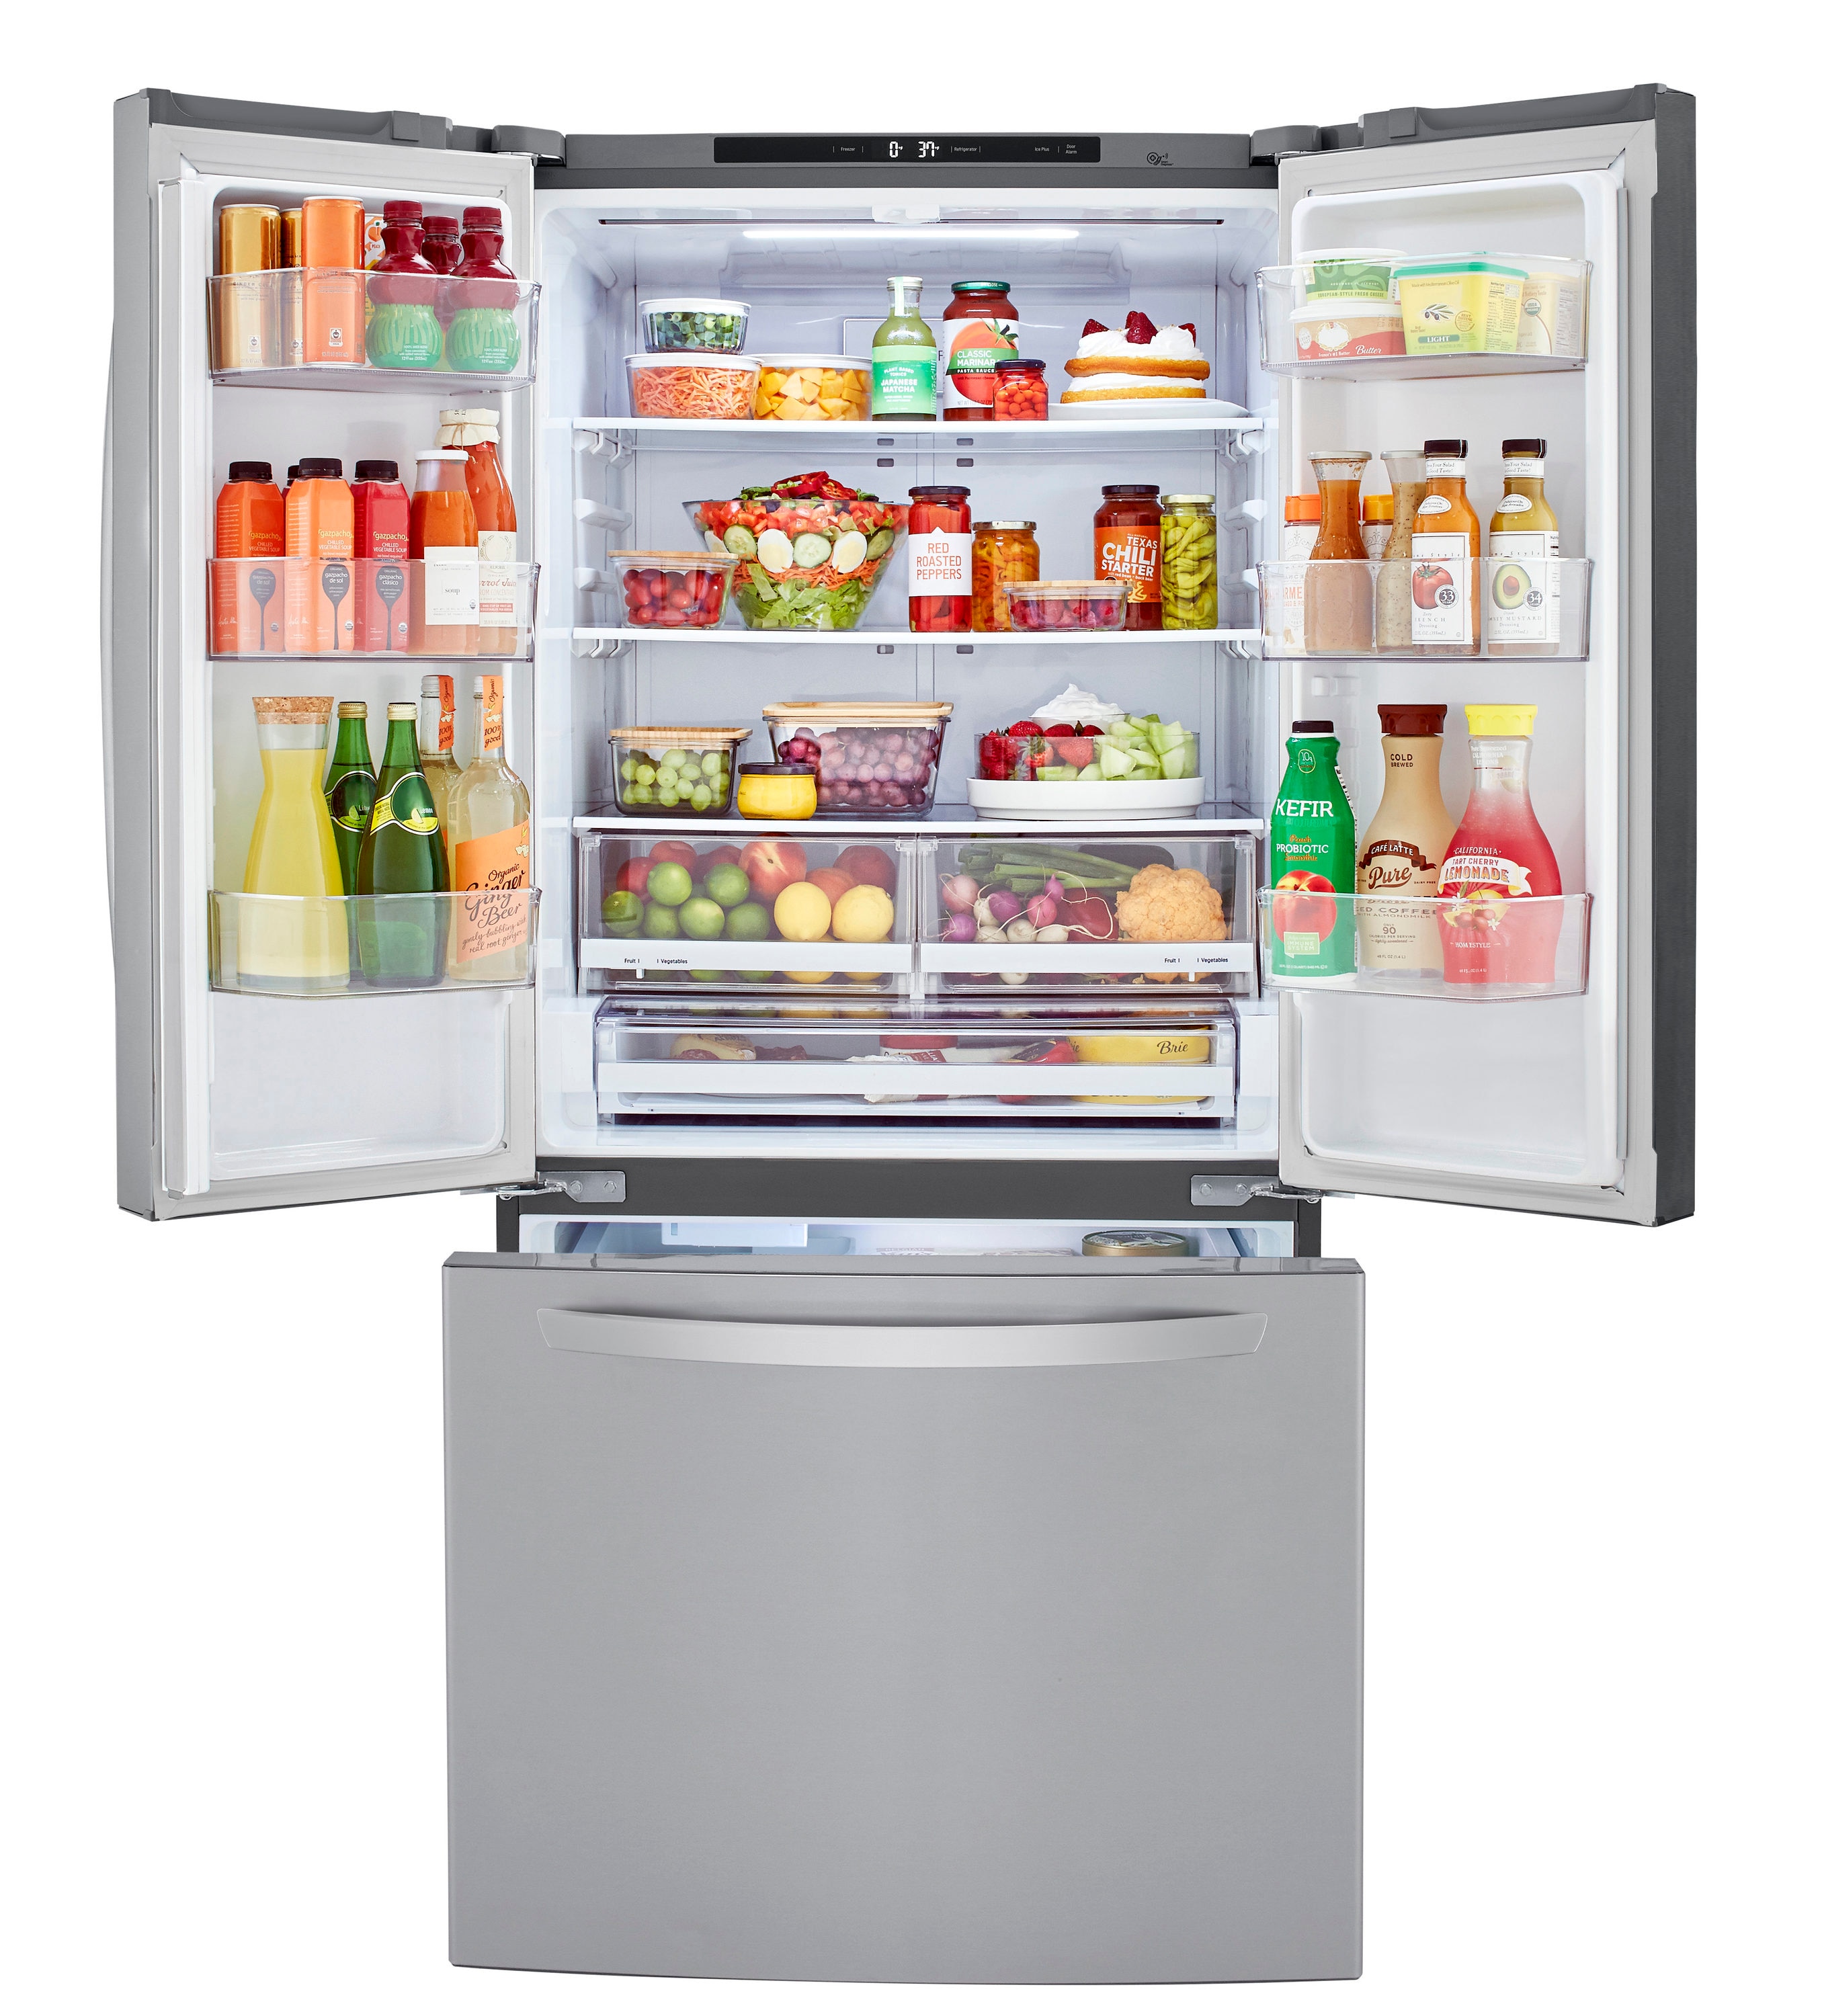 Холодильник LG маленький. Холодильник LG 376. S57 холодильник. Холодильник s5990fg3. Холодильник 25 градусов